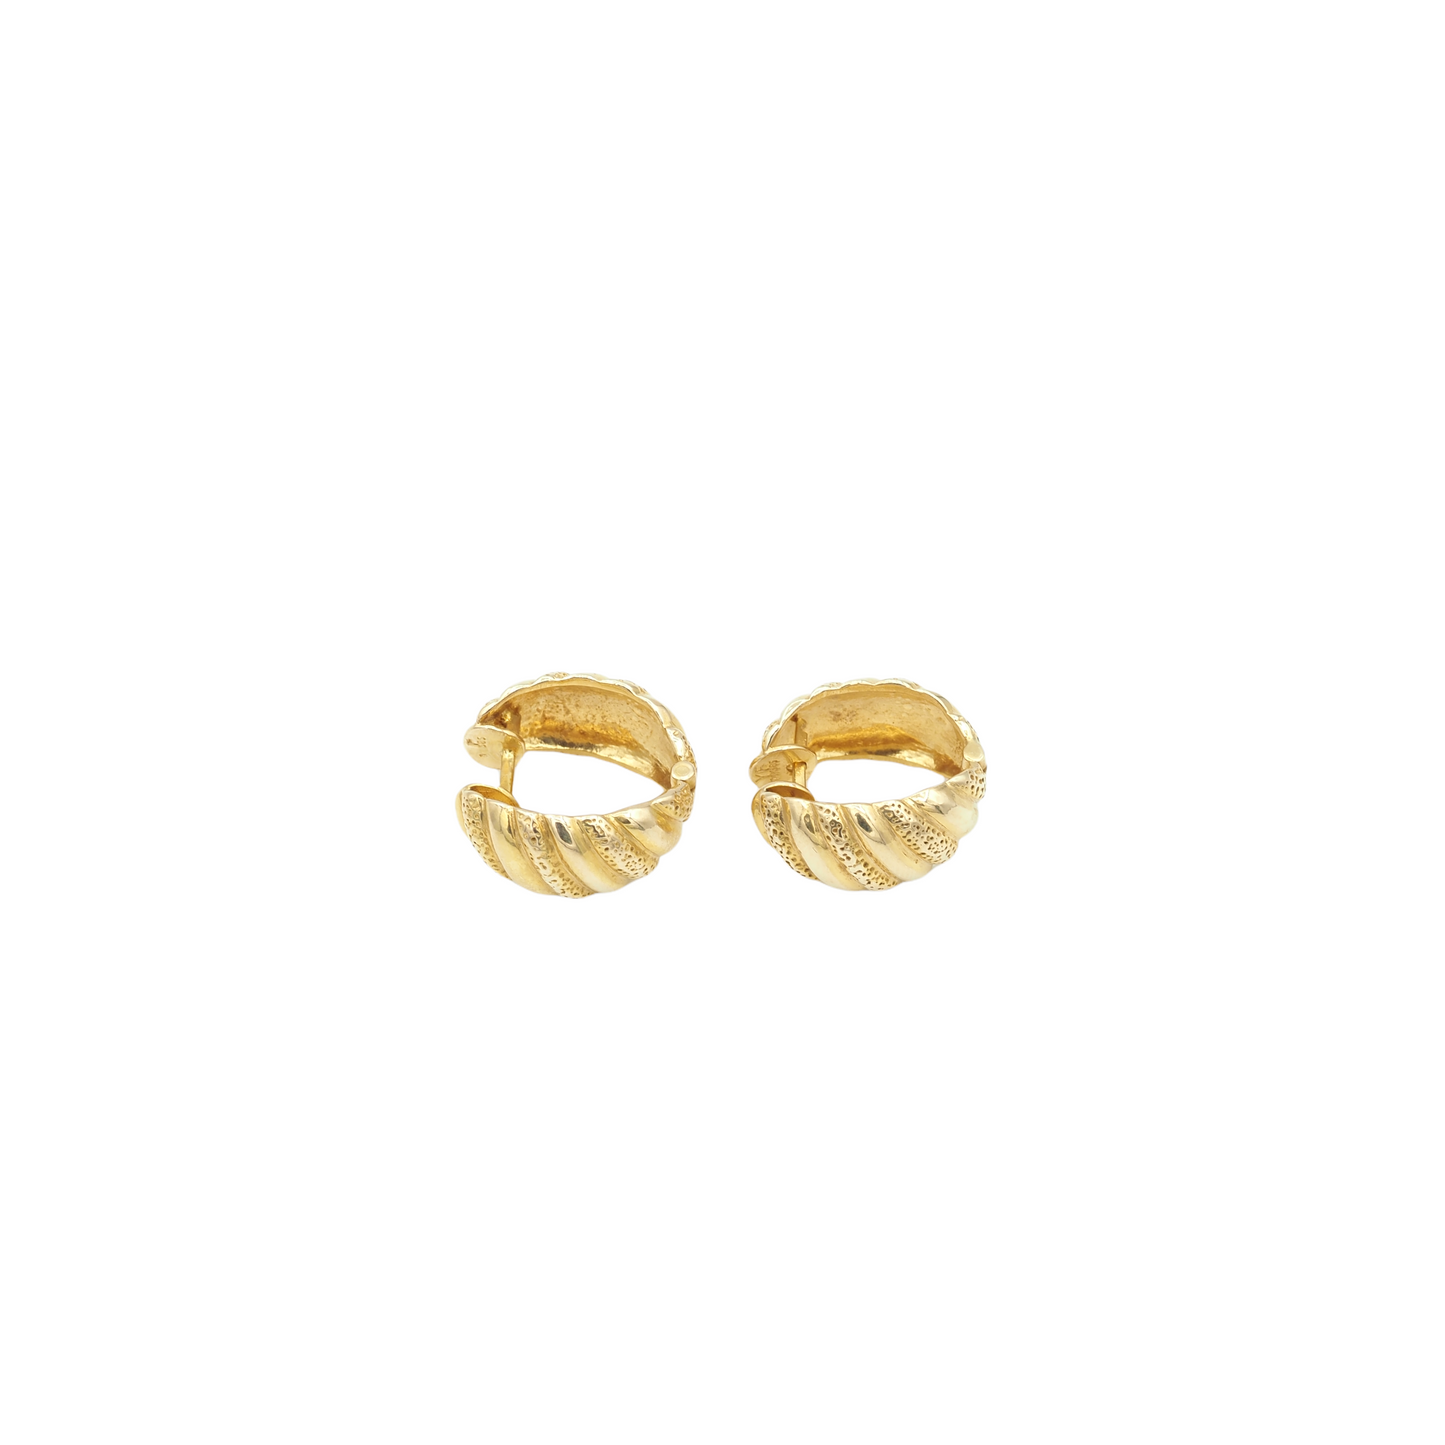 Minimalistic earrings - La Trouvaille